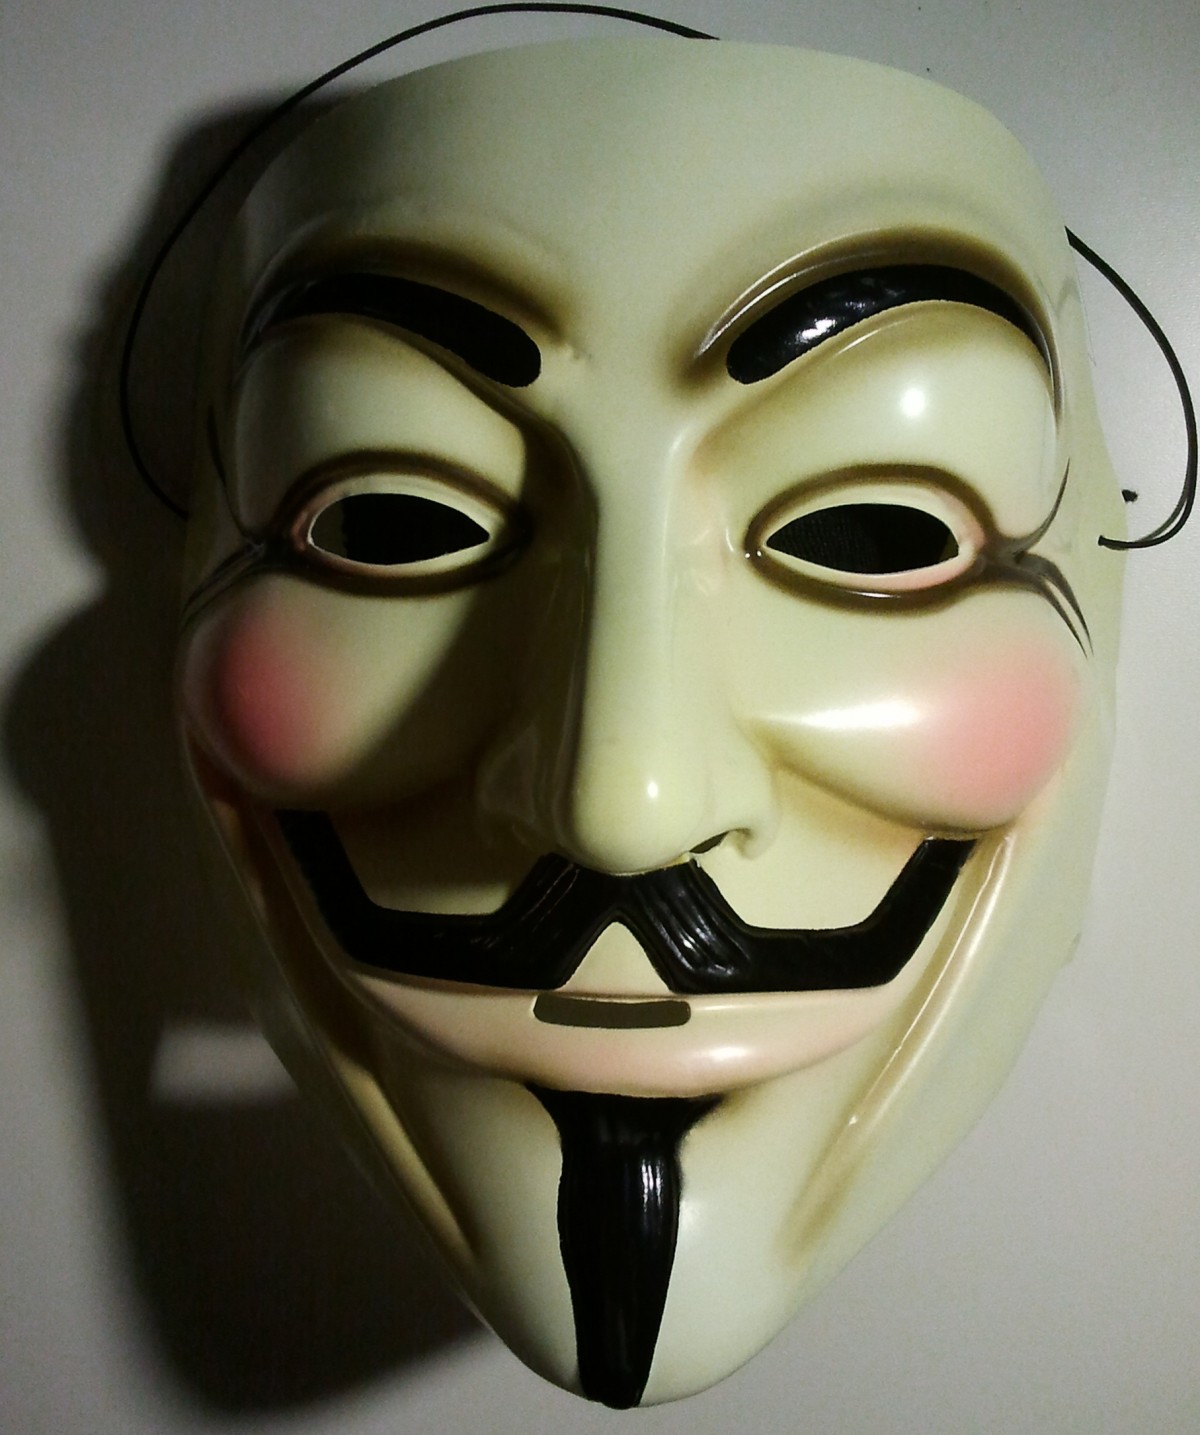 Student blog – Hacktivism: Justice or Anarchy?